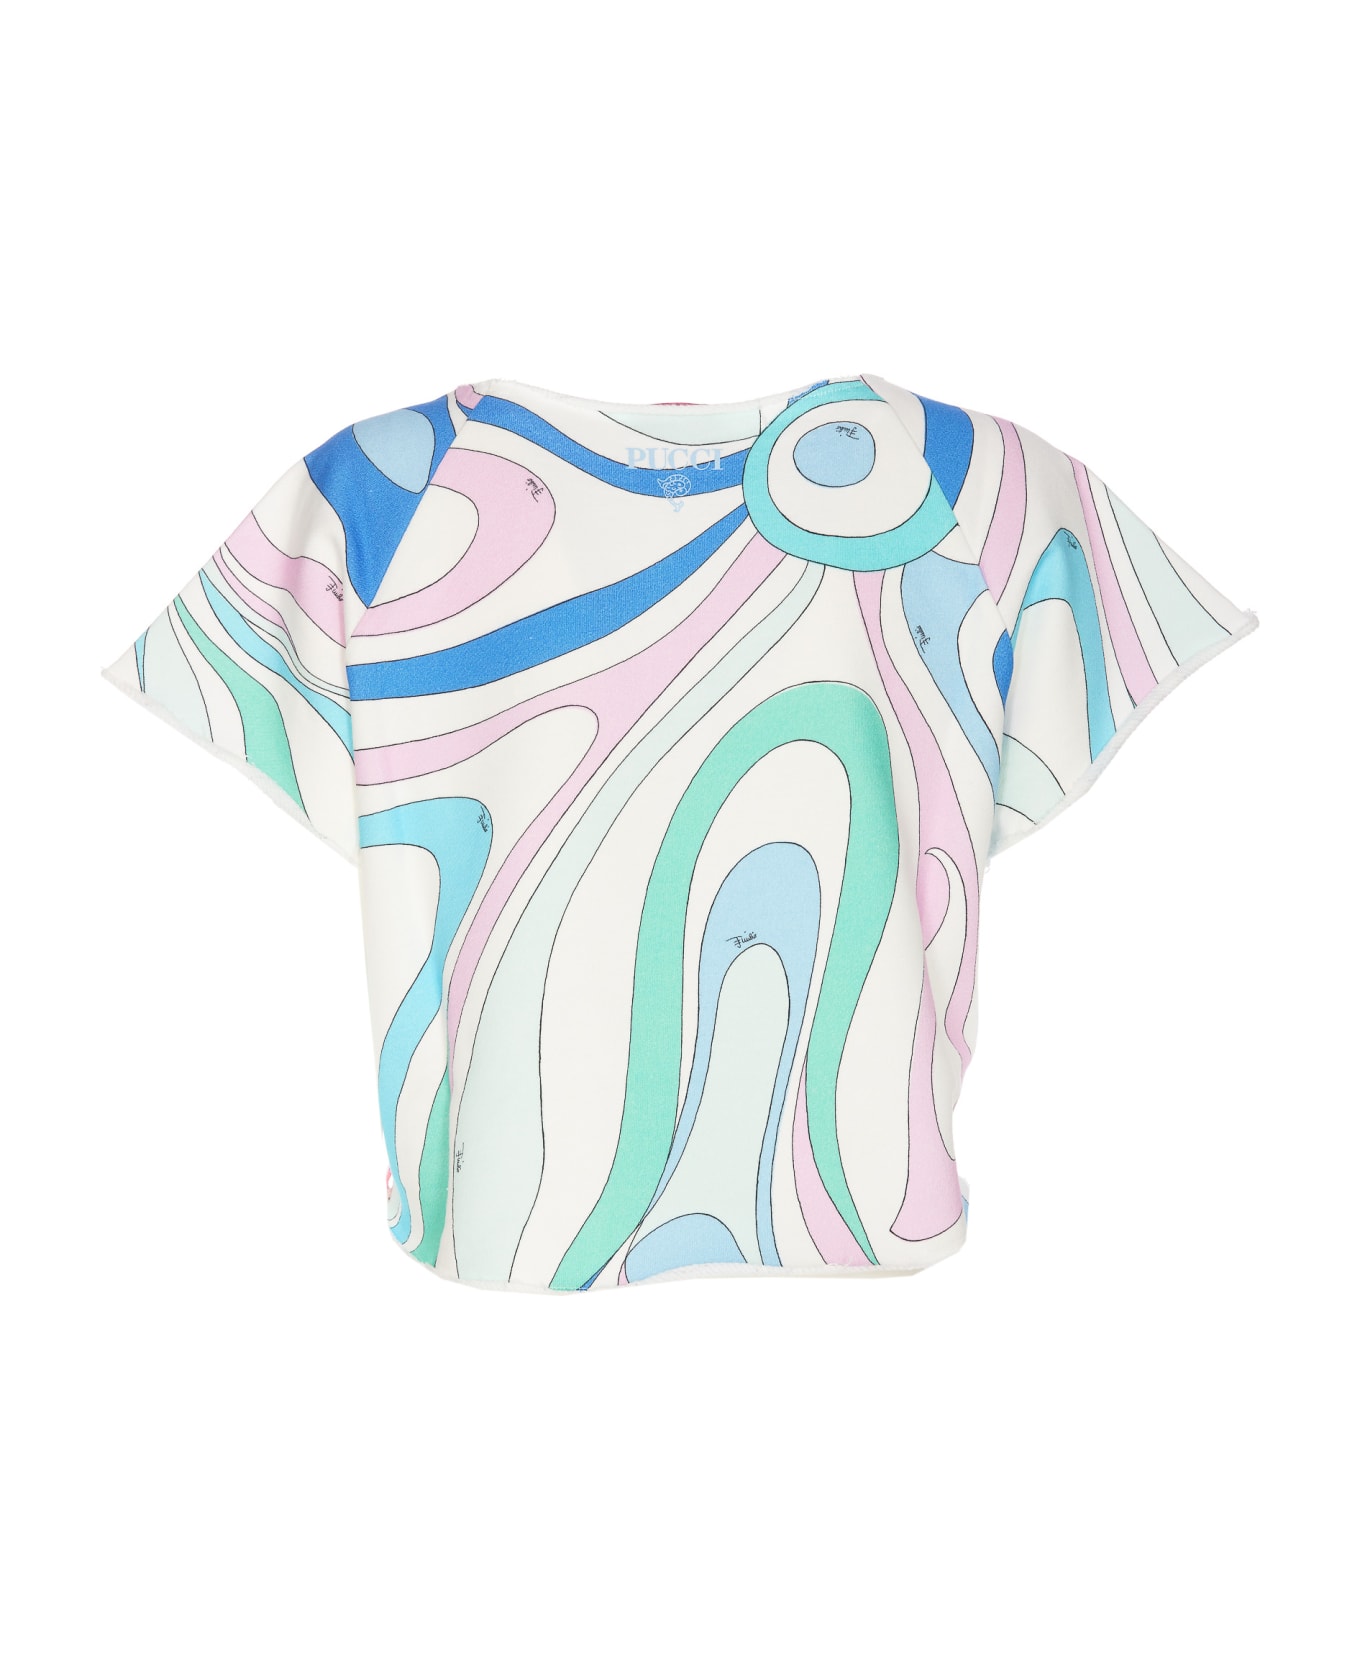 Pucci Marmo Print T-shirt - MultiColour